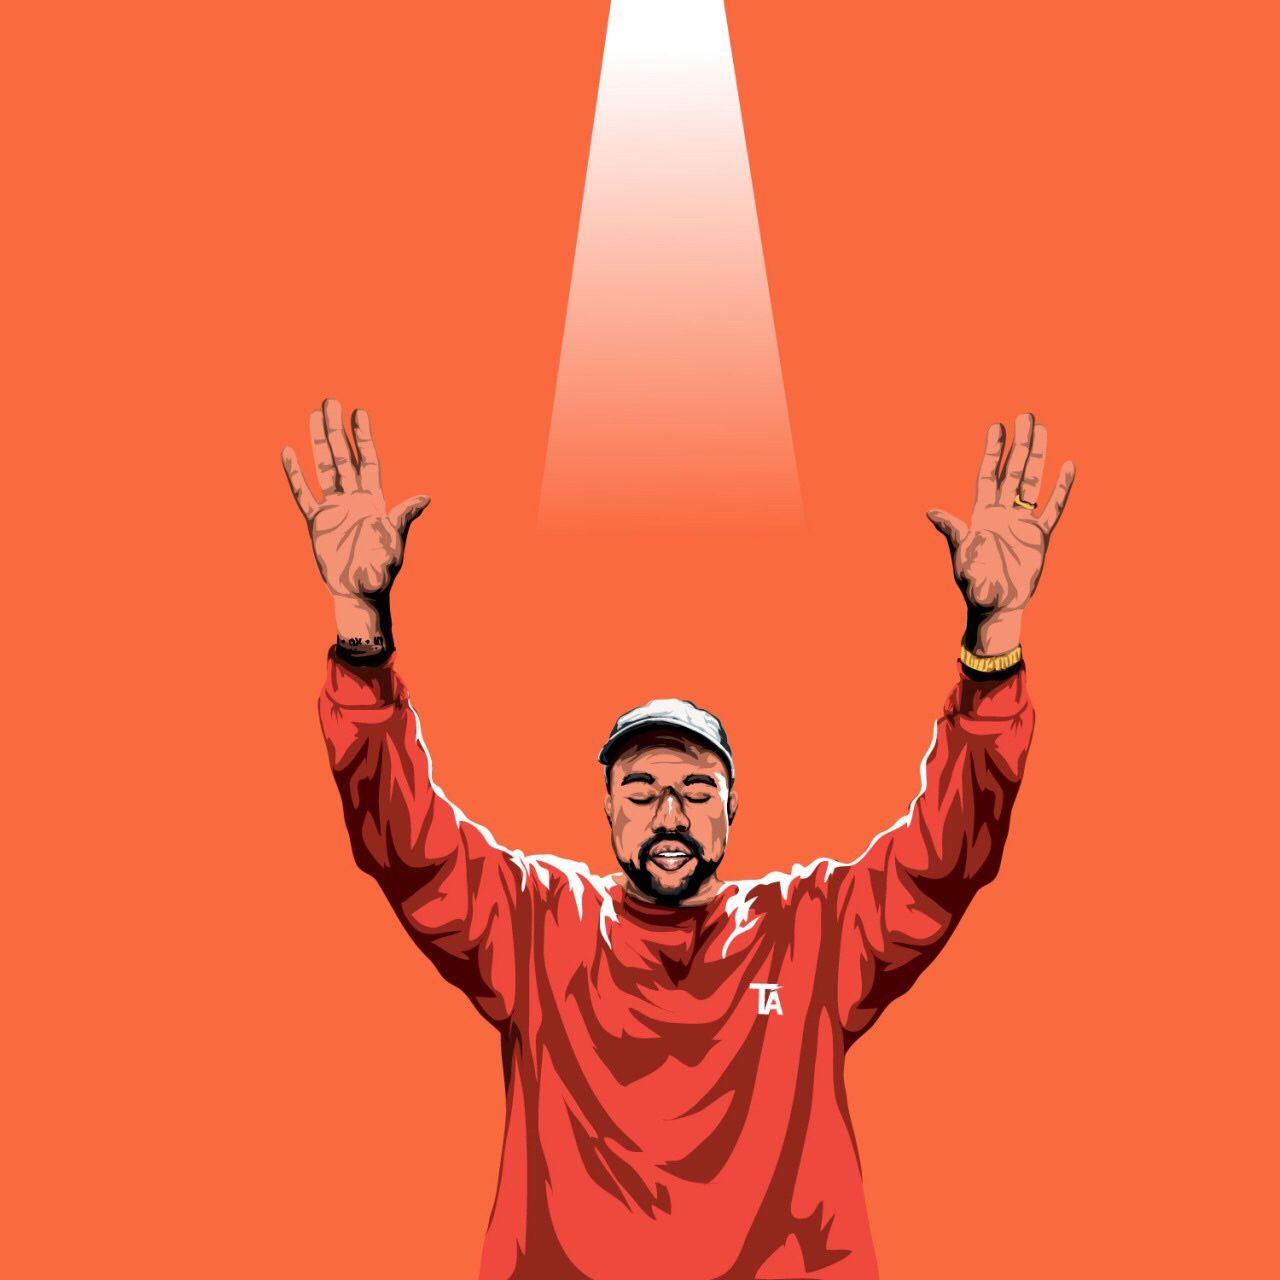 Kanye West Cartoon Wallpapers - Top Free Kanye West Cartoon Backgrounds ...